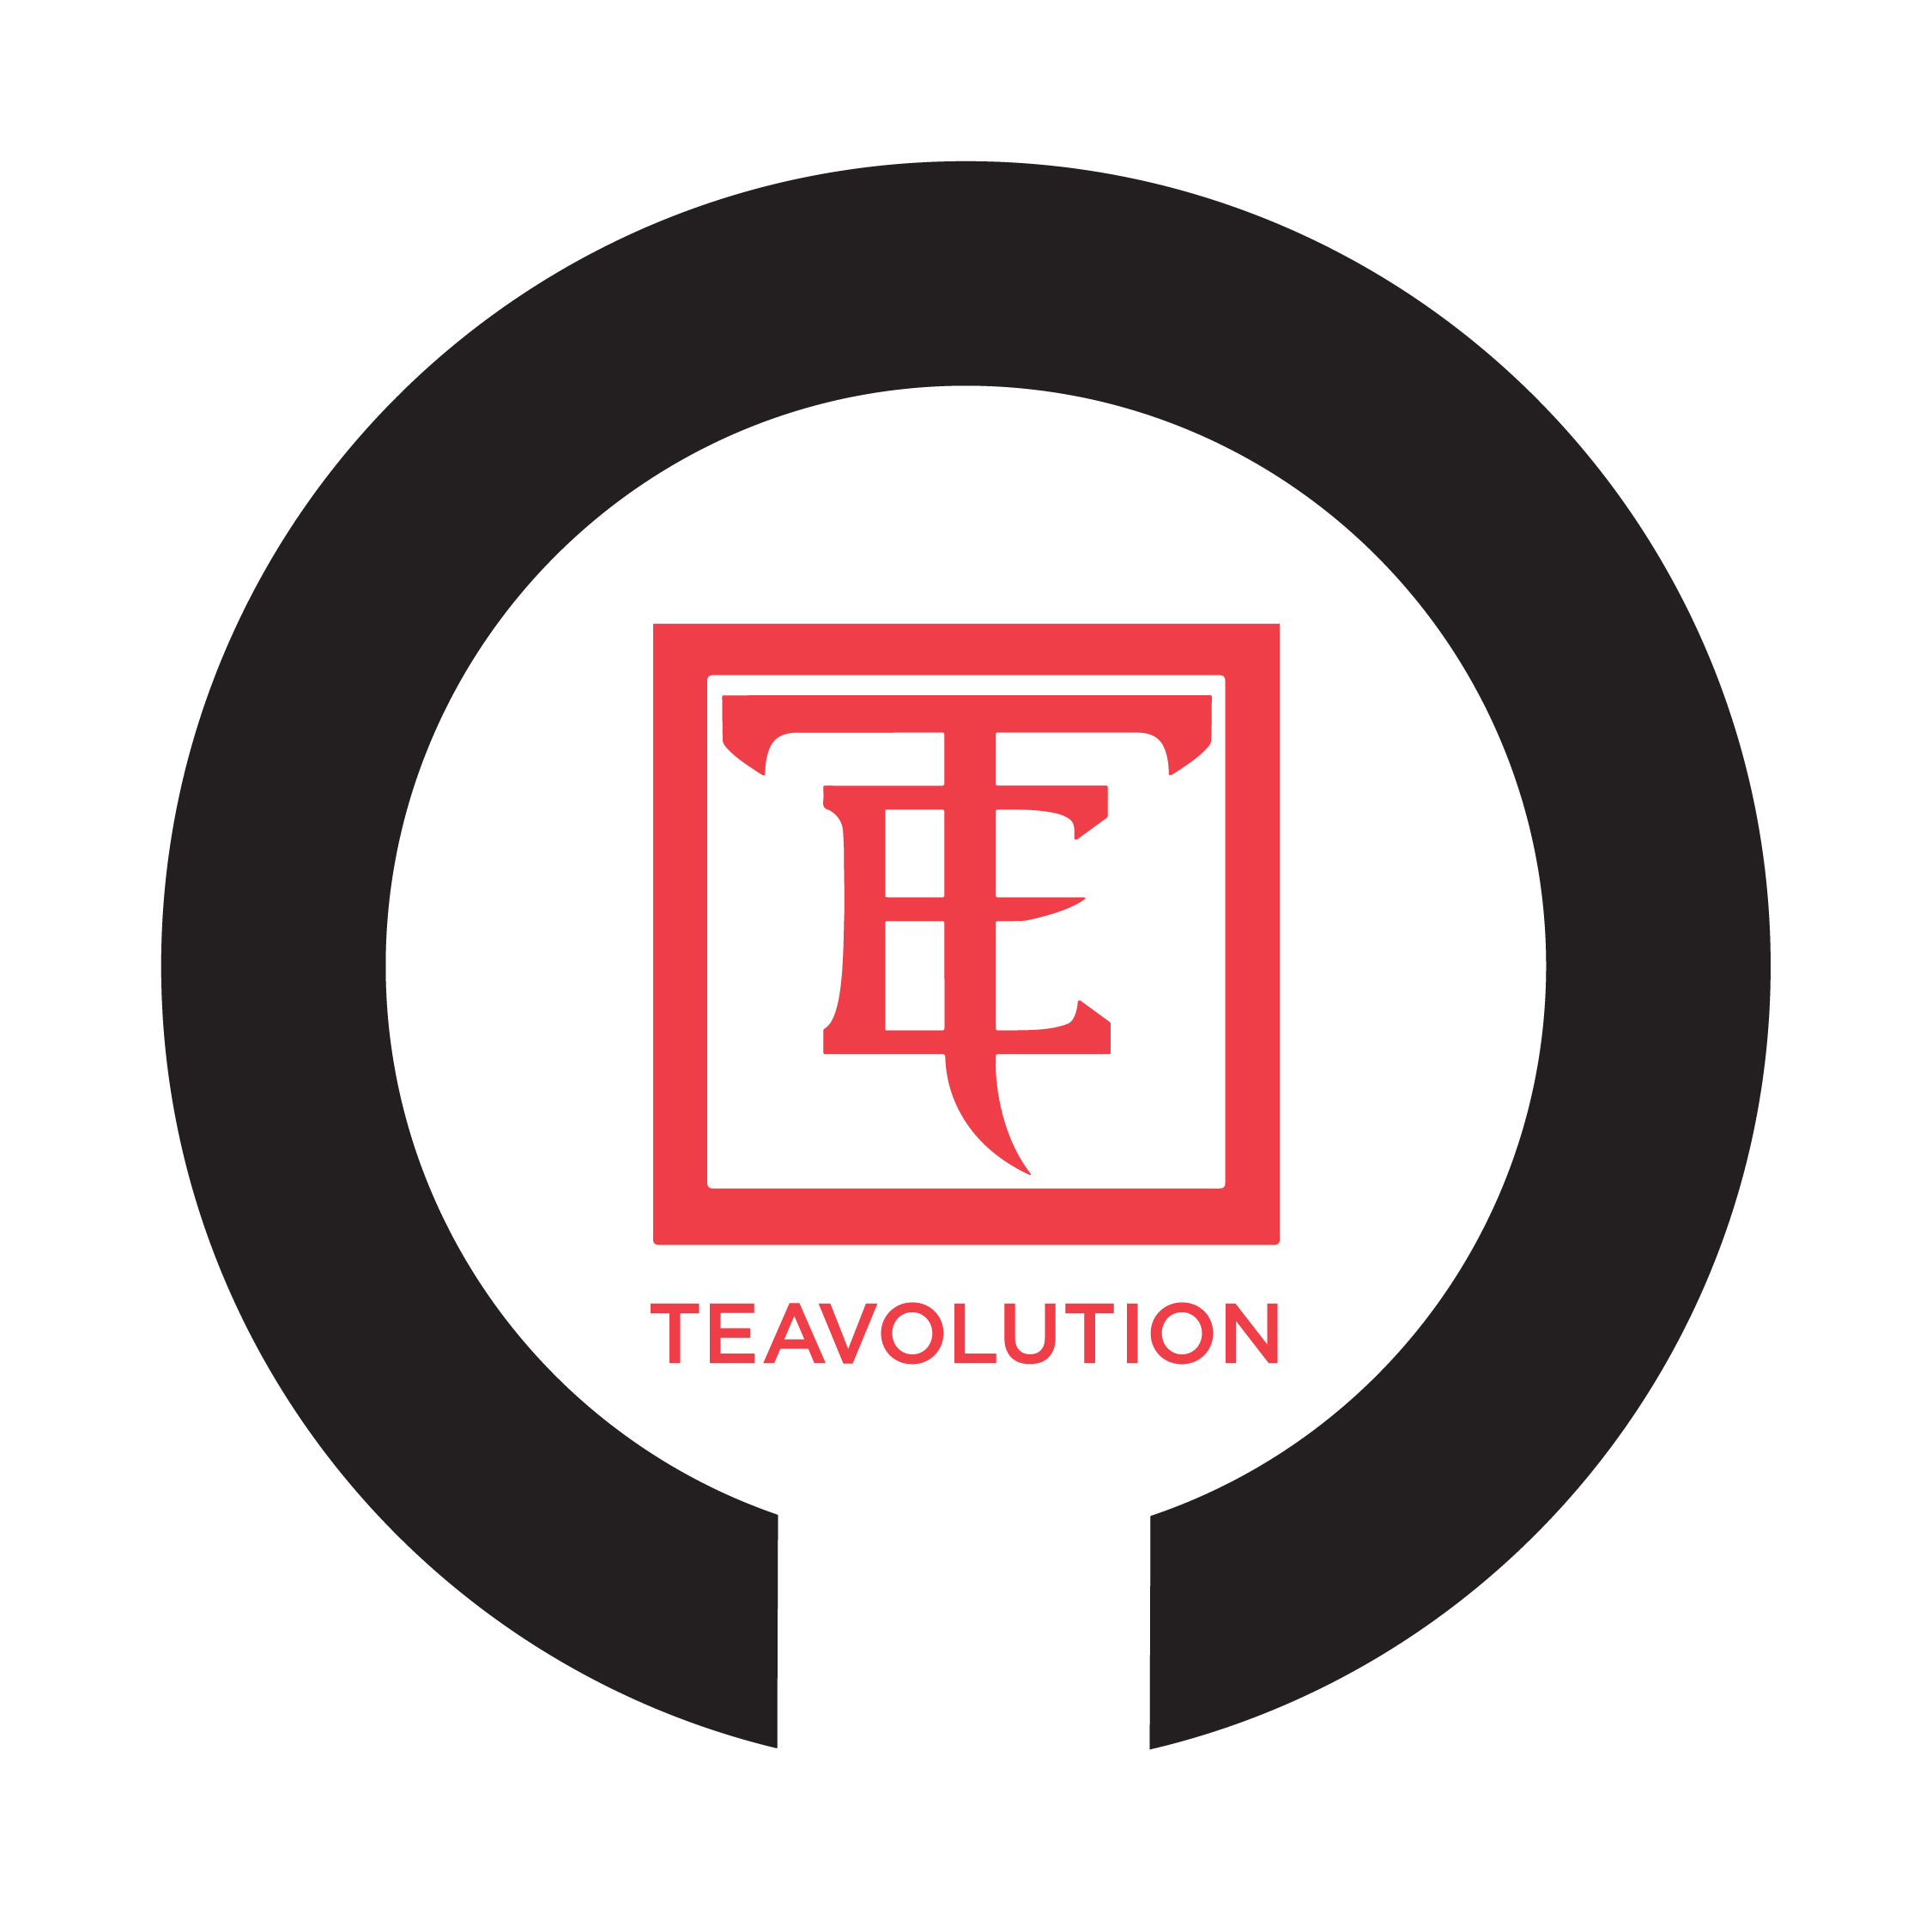 Teavolution logo